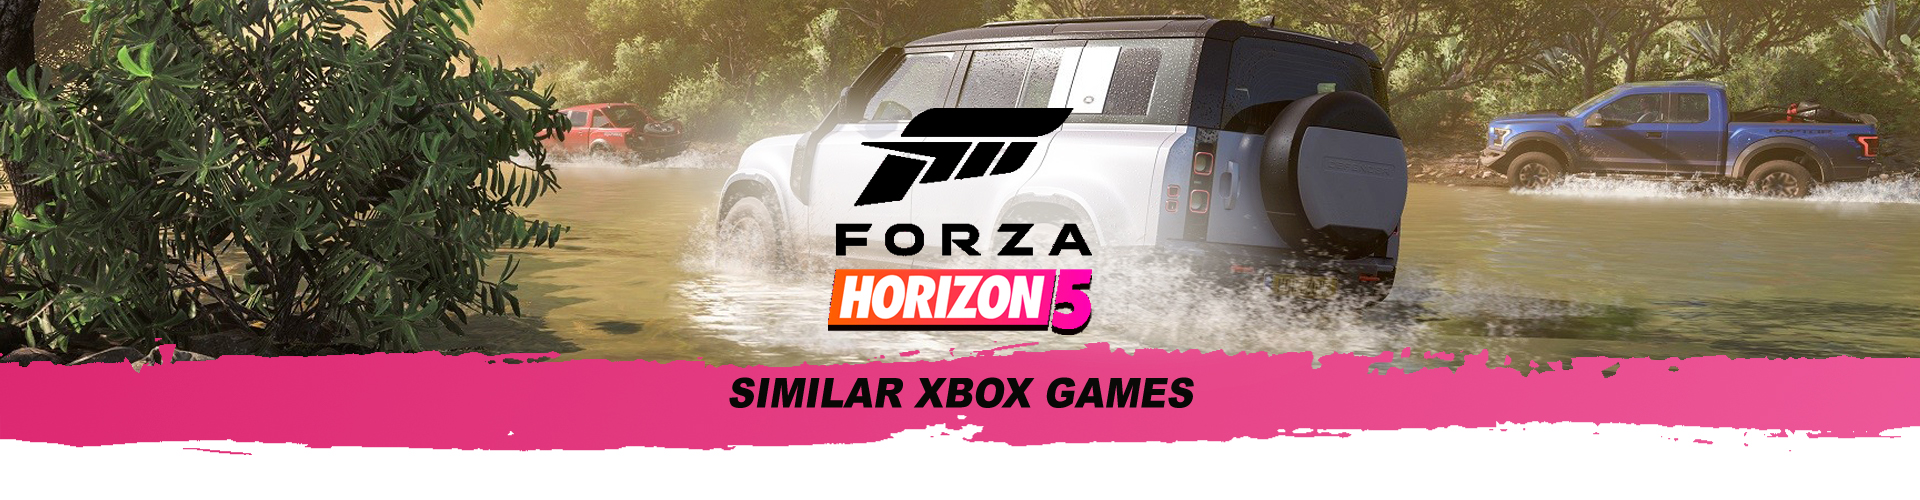 Xbox Games like Forza Horizon 5